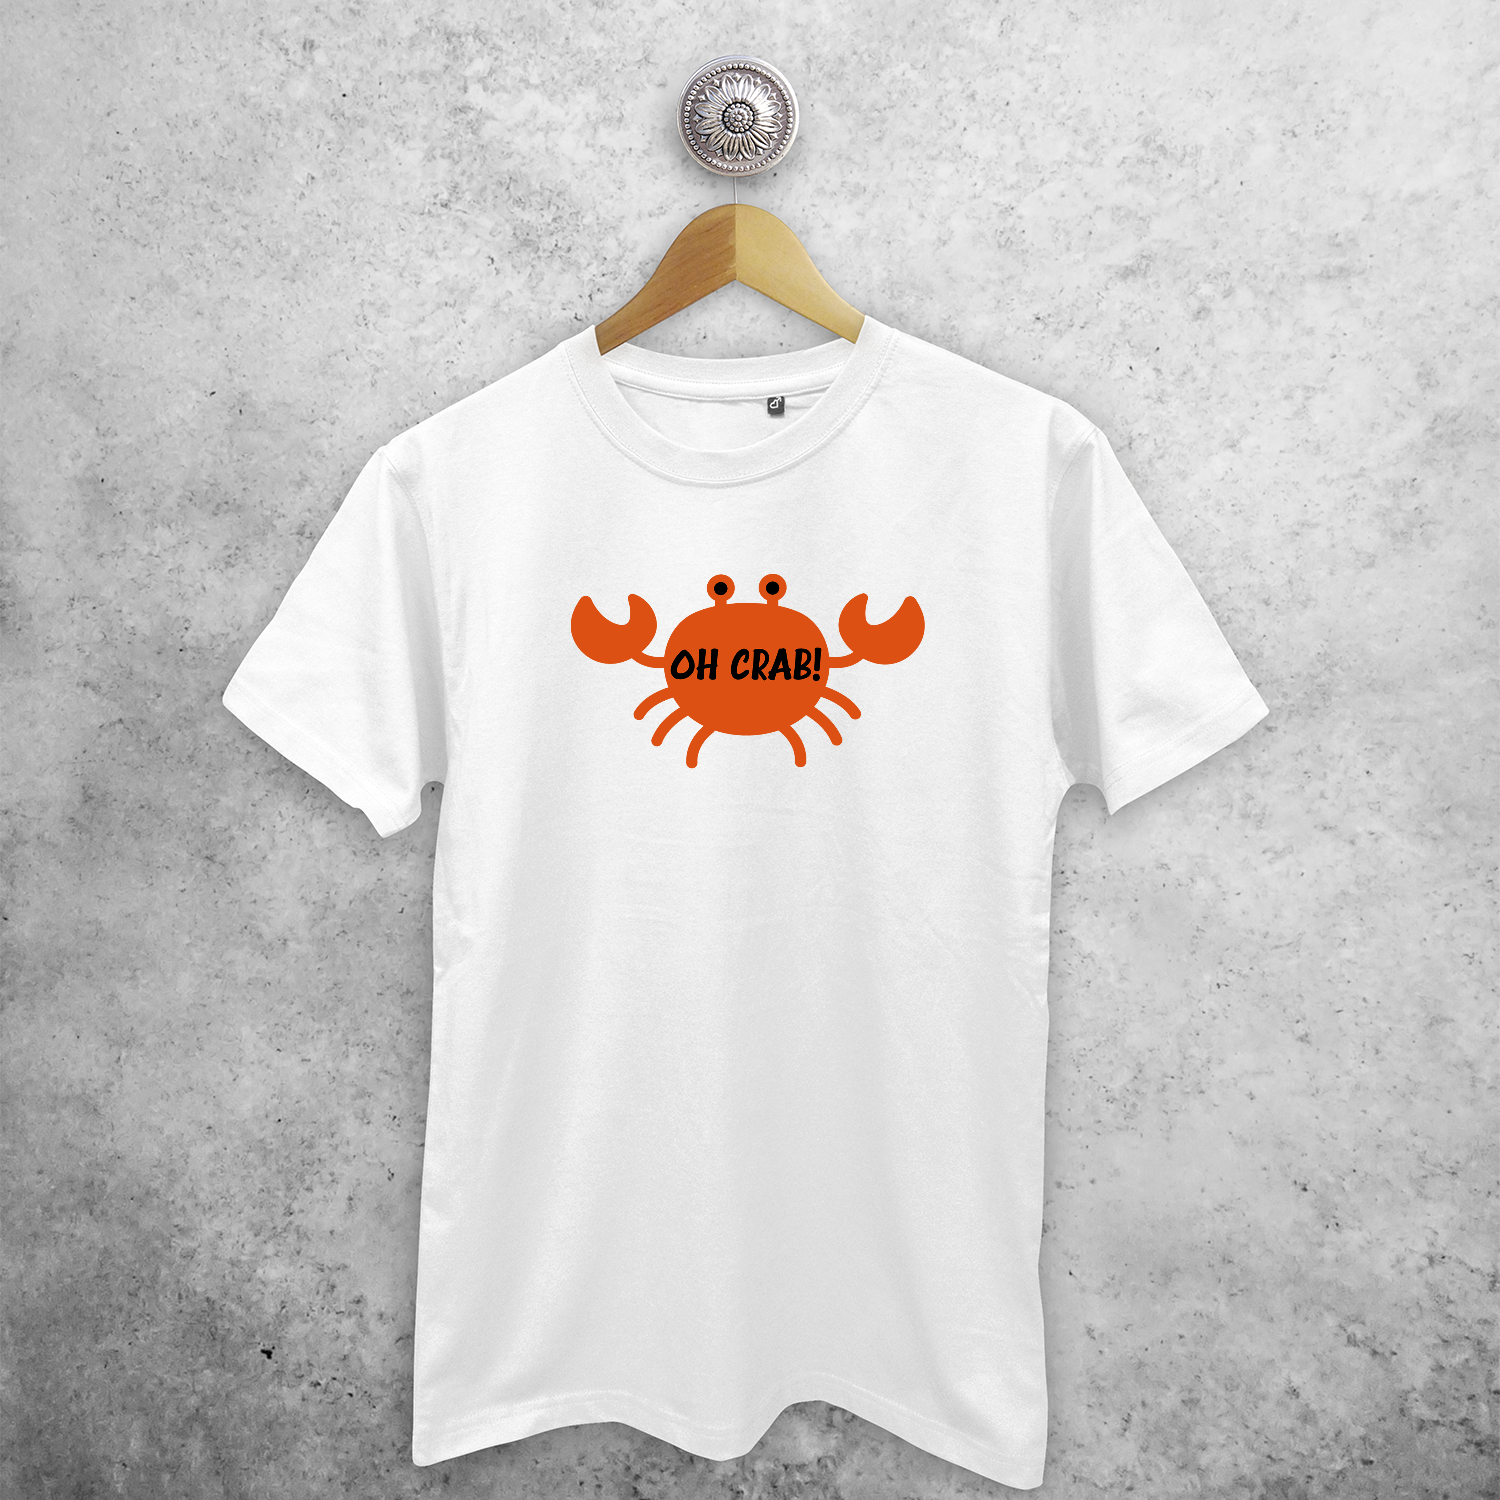 'Oh crab!' adult shirt